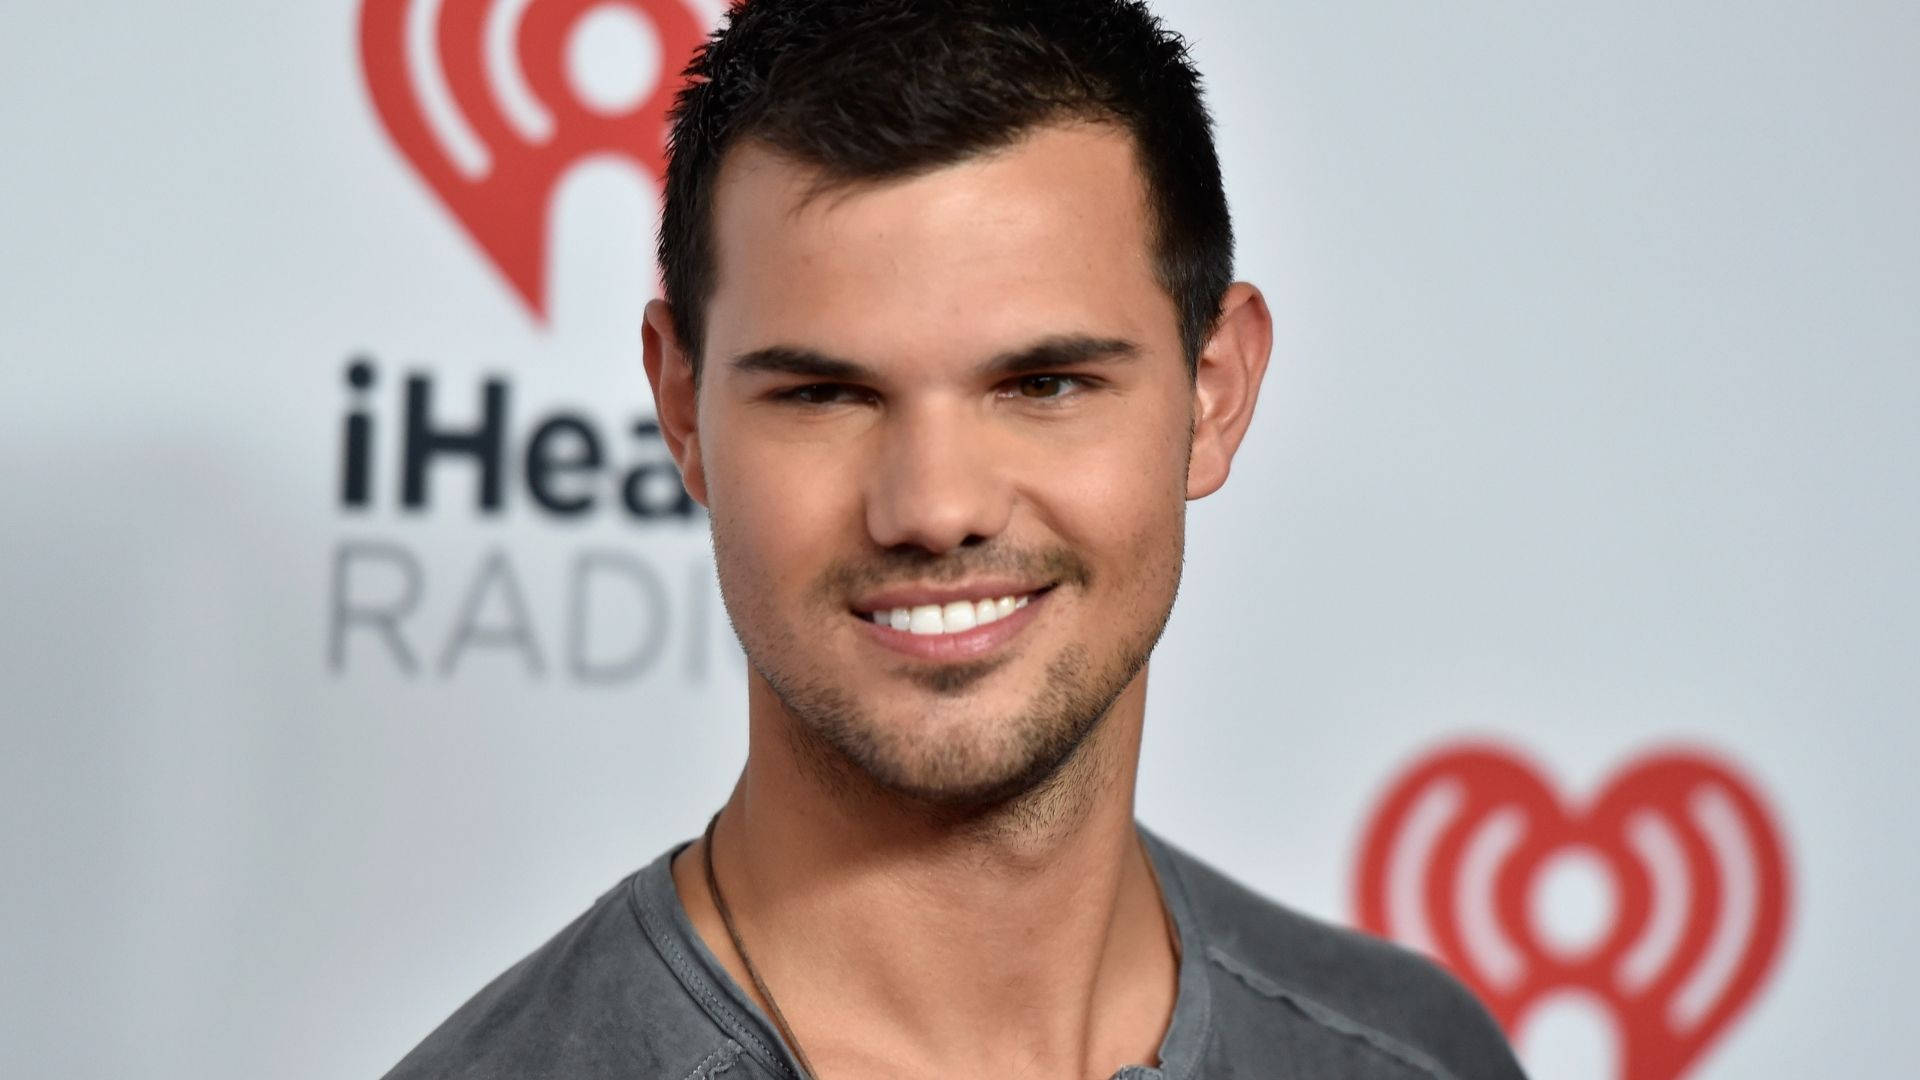 Taylor Lautner Sweet Smile Background